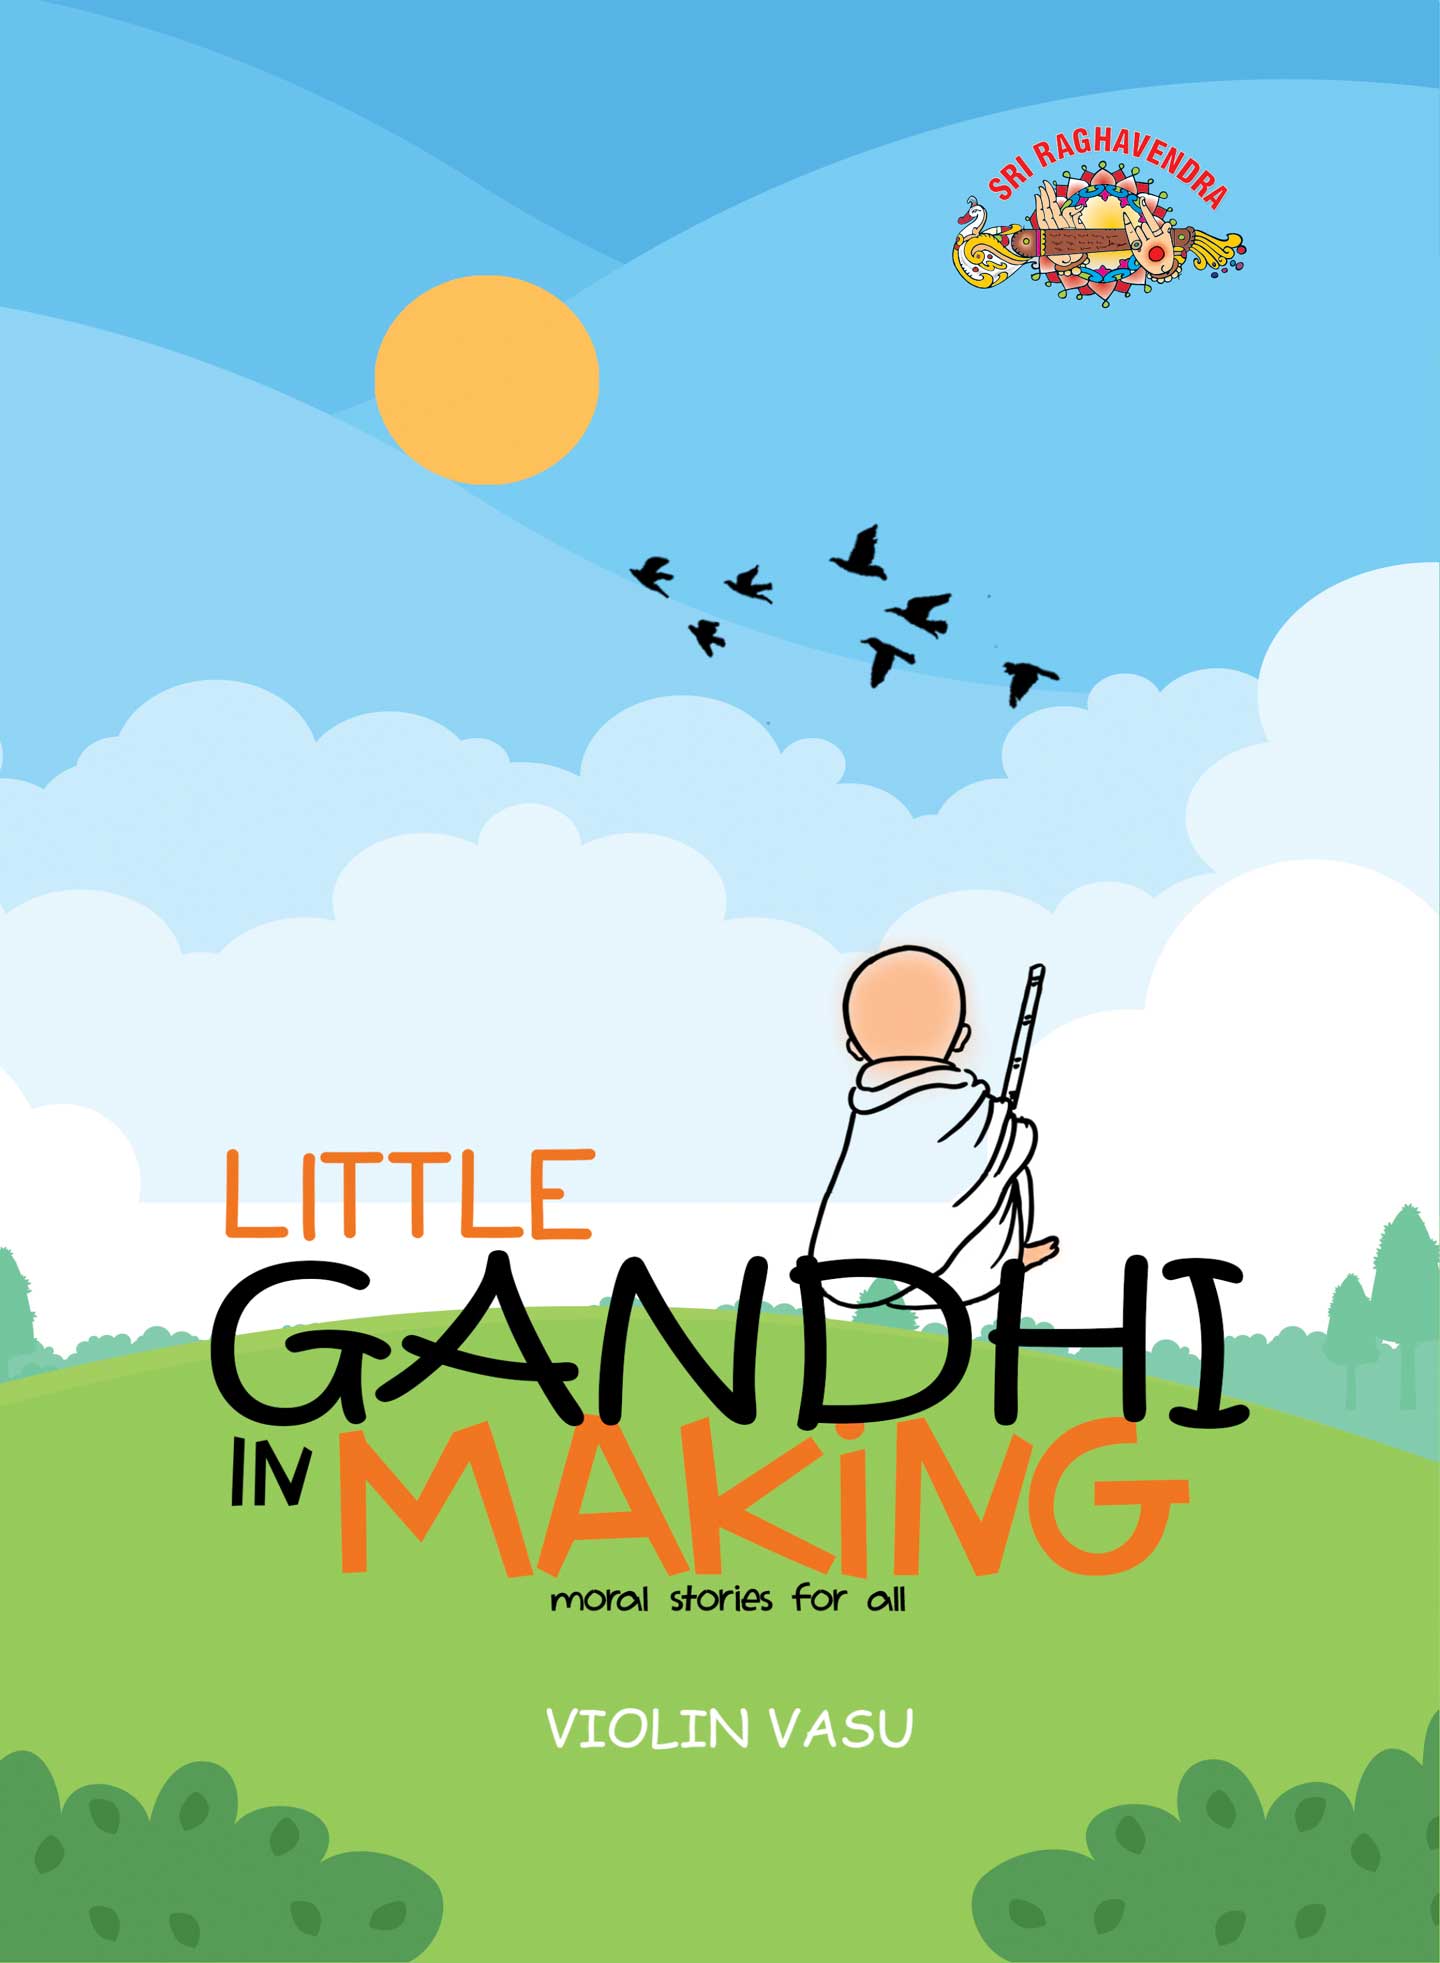 Little Gandhi in Making: Moral stories for all